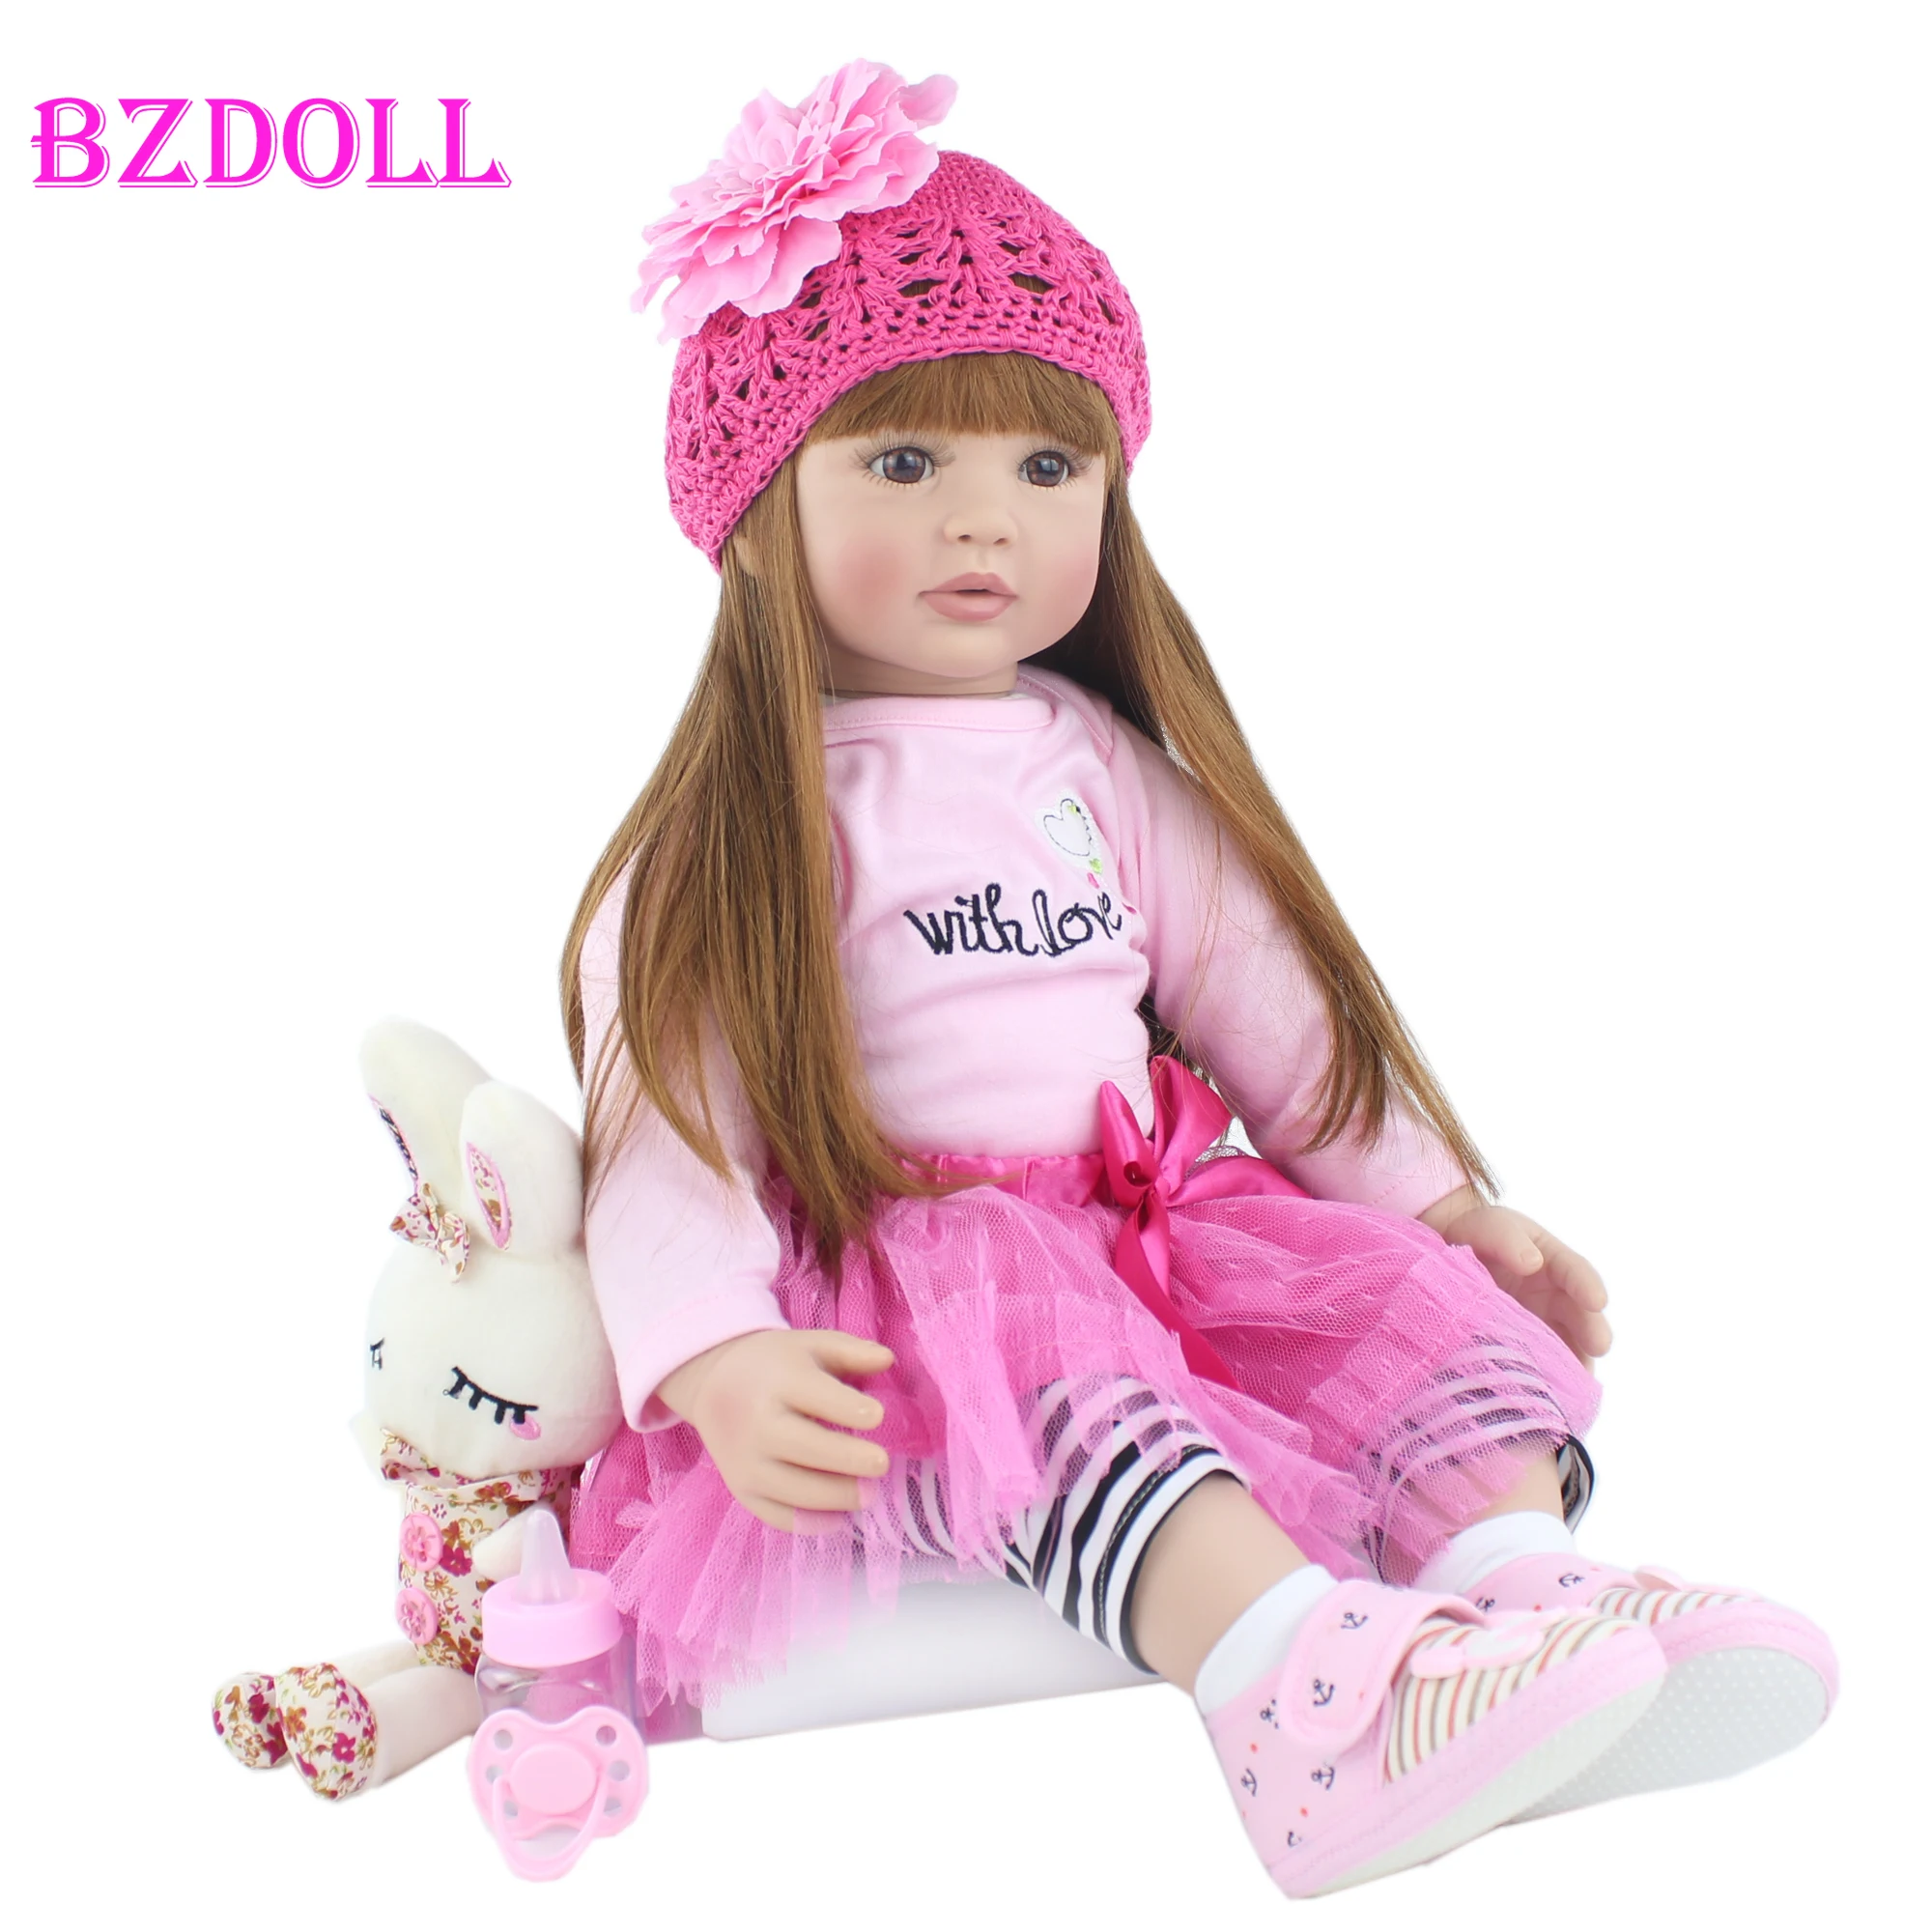 

60cm Silicone Reborn Baby Doll Toy Realistic Vinyl Princess Toddler Bebe Child Birthday Gift Girl Babies Boneca Brinquedo